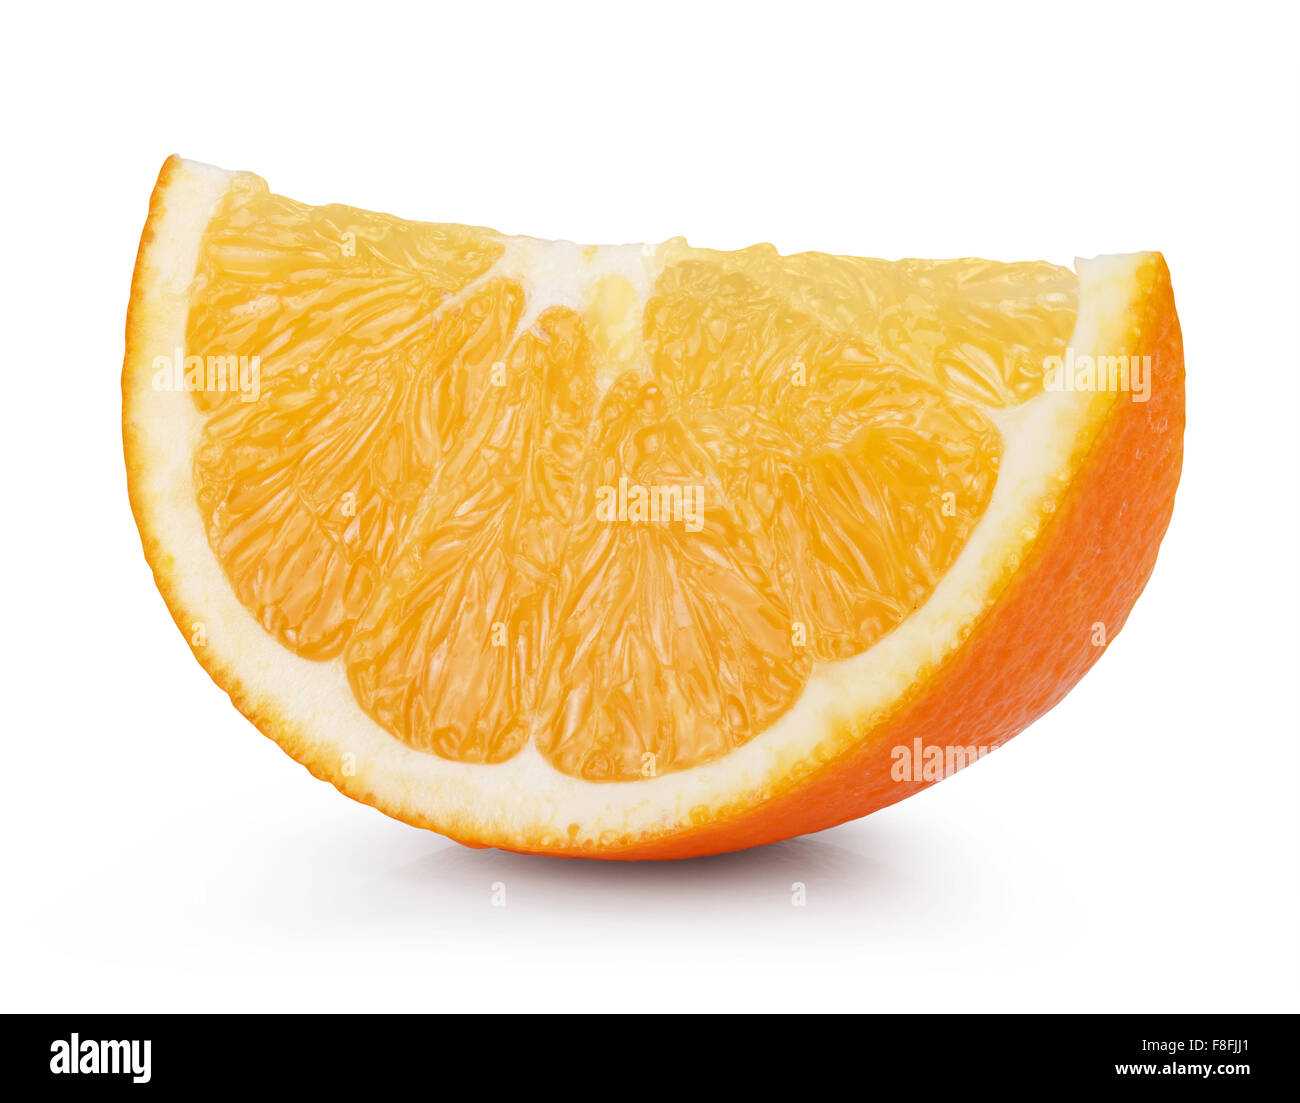 Fresco de naranja madura sobre un fondo blanco. Trazado de recorte Foto de stock